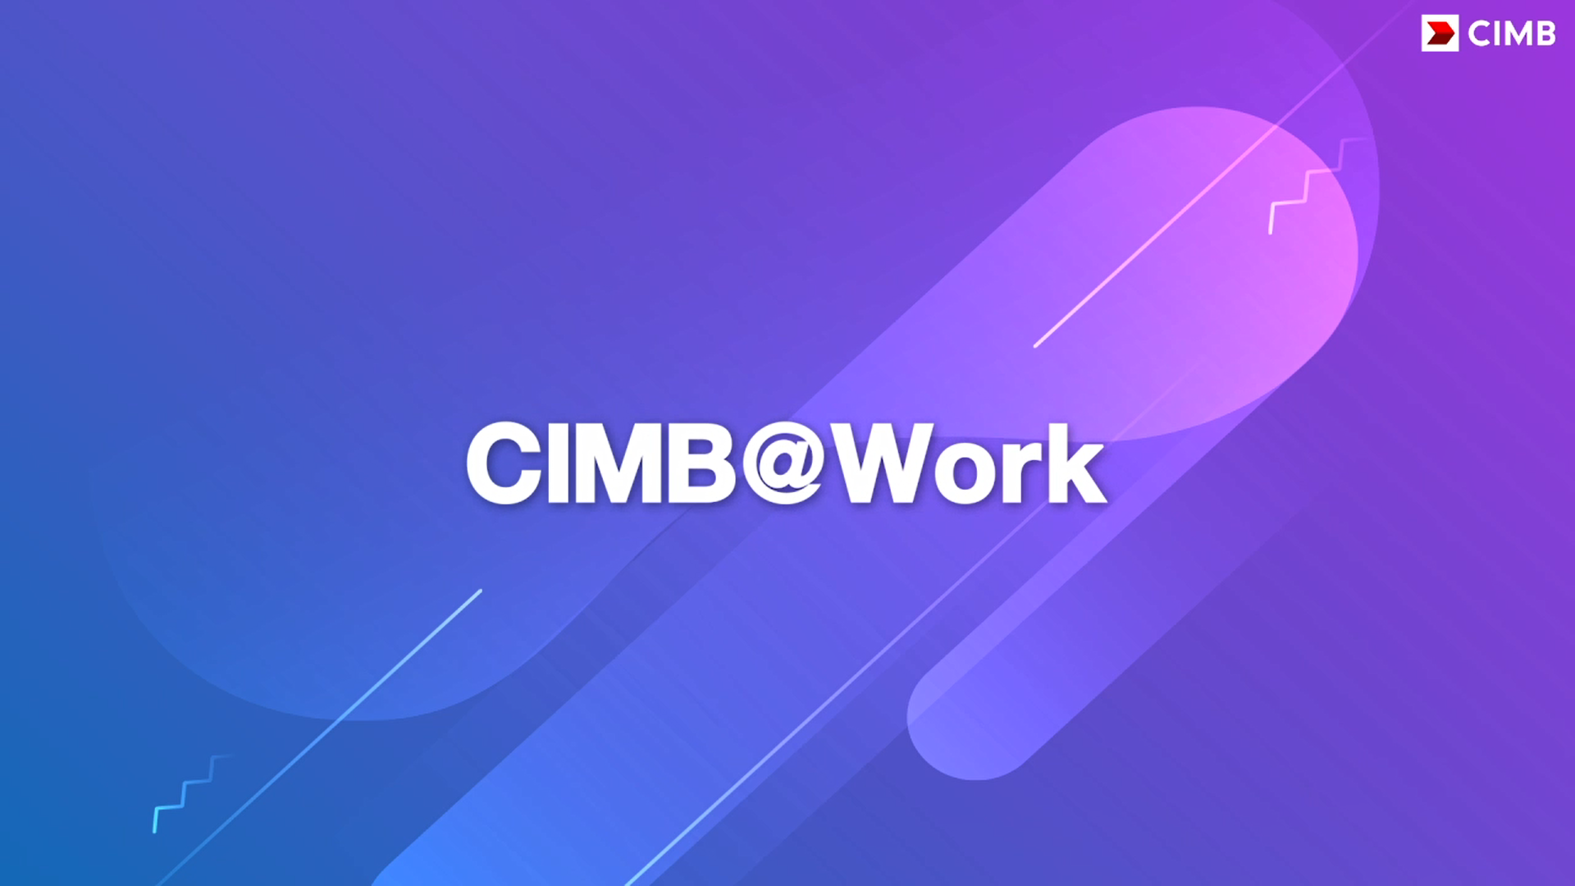 CIMB@Work